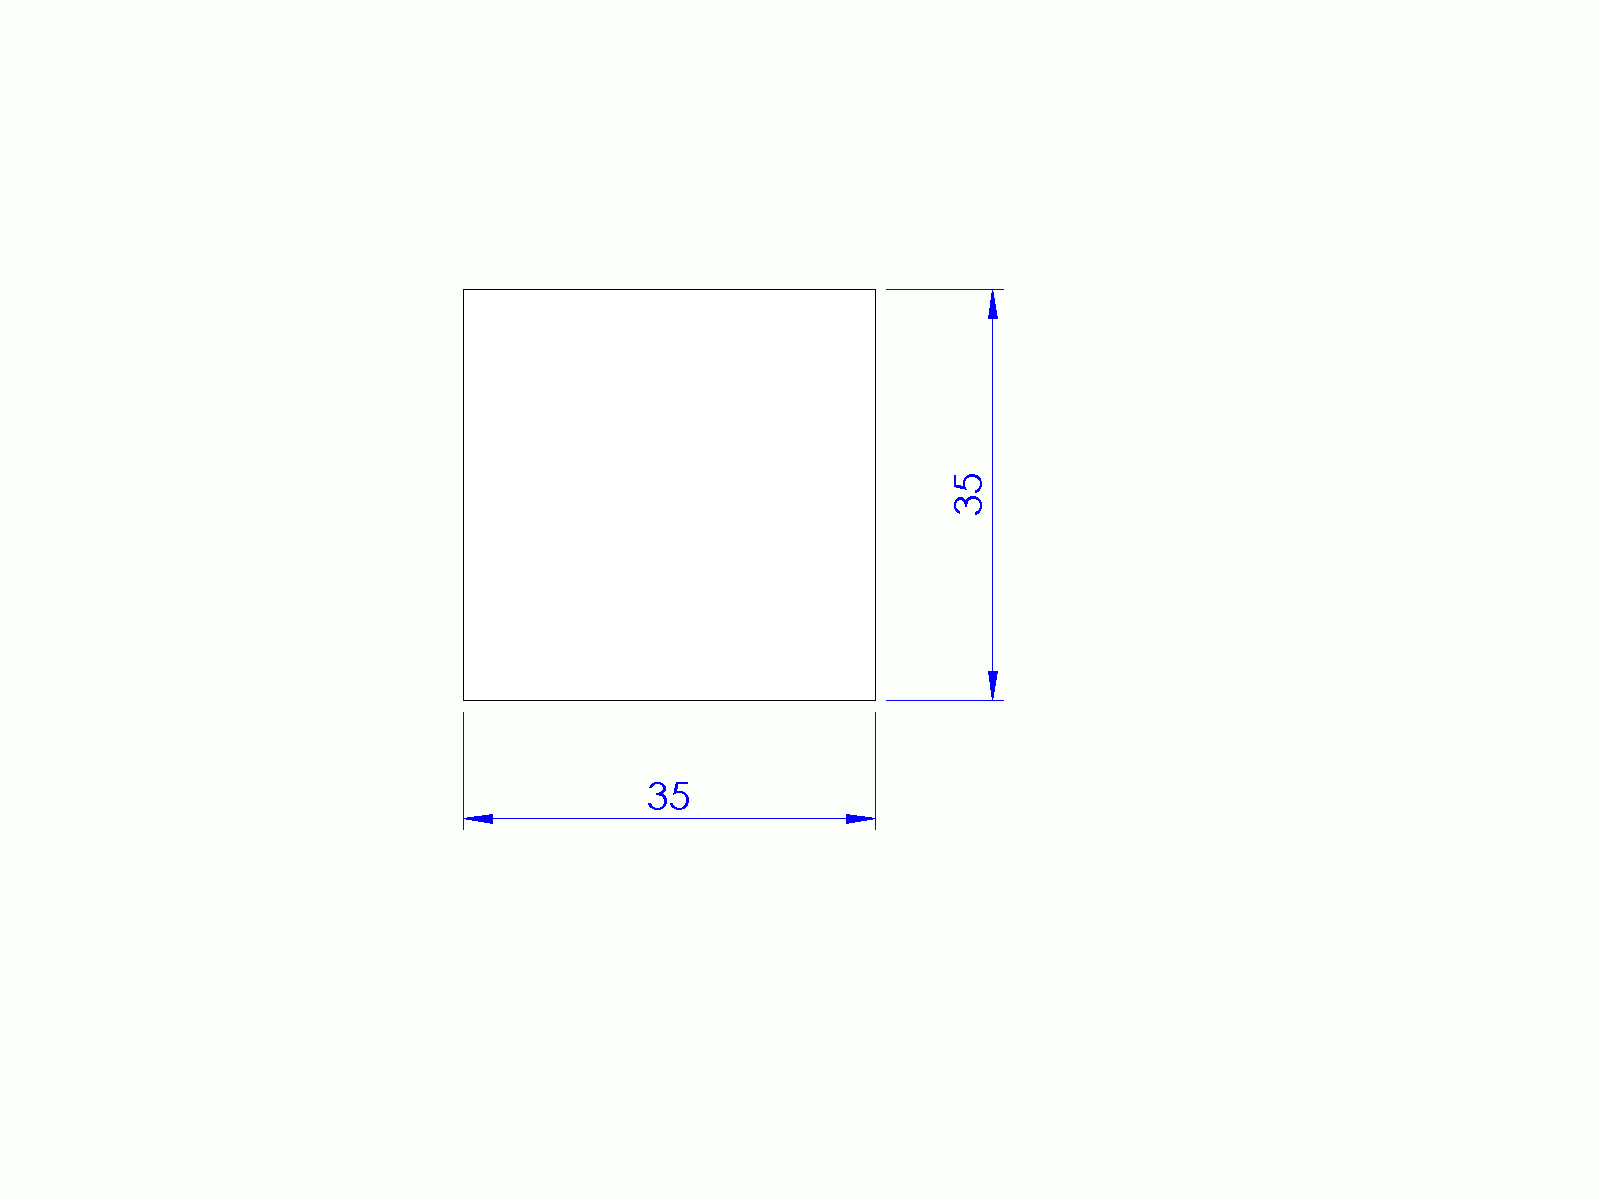 Silicone Profile P403535 - type format Square - regular shape